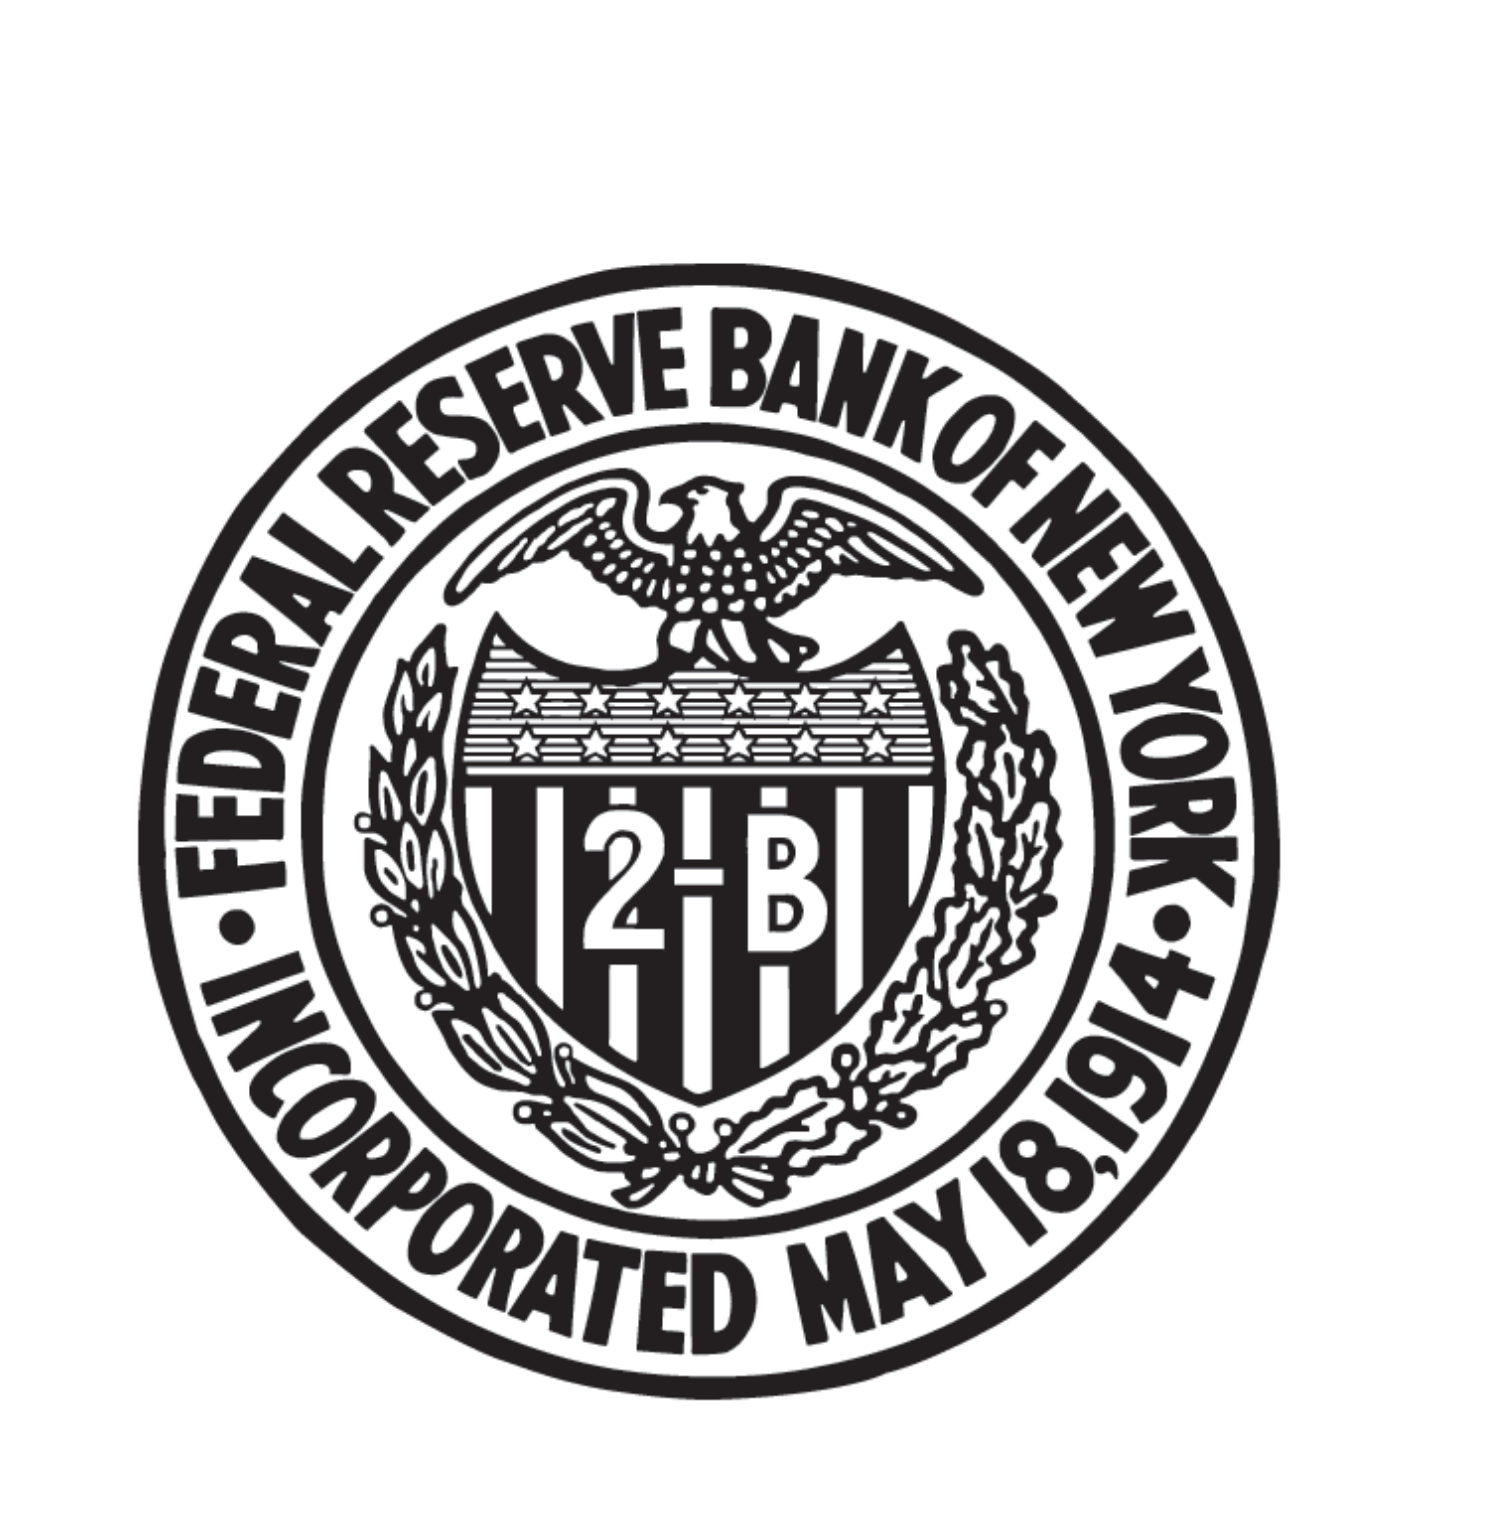 Federal Reserve Bank of New York 2023 Campus Forward Award Winner